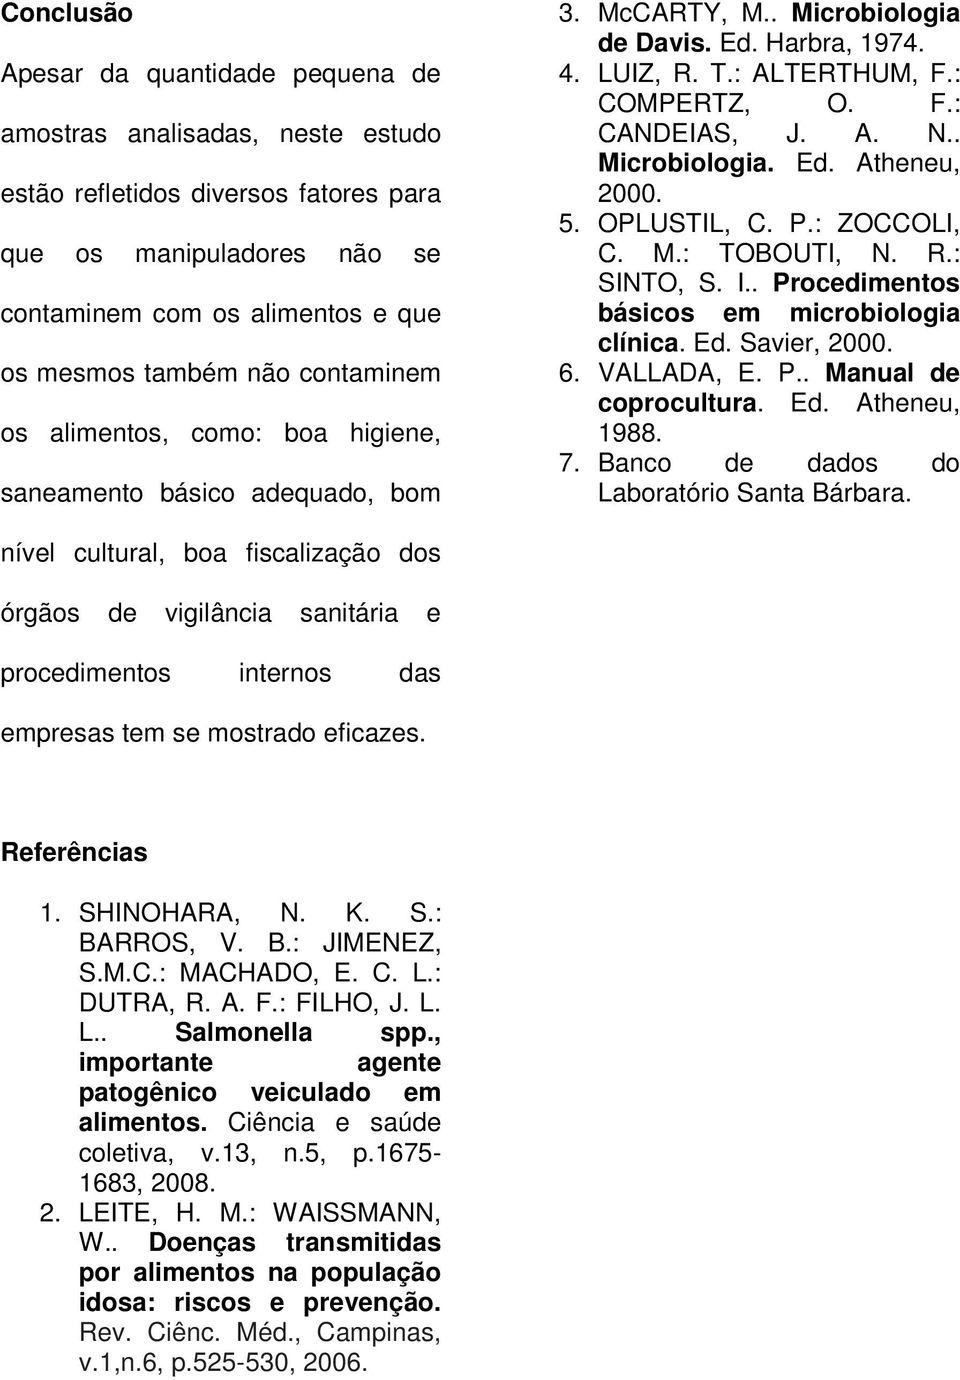 . Microbiologia. Ed. Atheneu, 2000. 5. OPLUSTIL, C. P.: ZOCCOLI, C. M.: TOBOUTI, N. R.: SINTO, S. I.. Procedimentos básicos em microbiologia clínica. Ed. Savier, 2000. 6. VALLADA, E. P.. Manual de coprocultura.